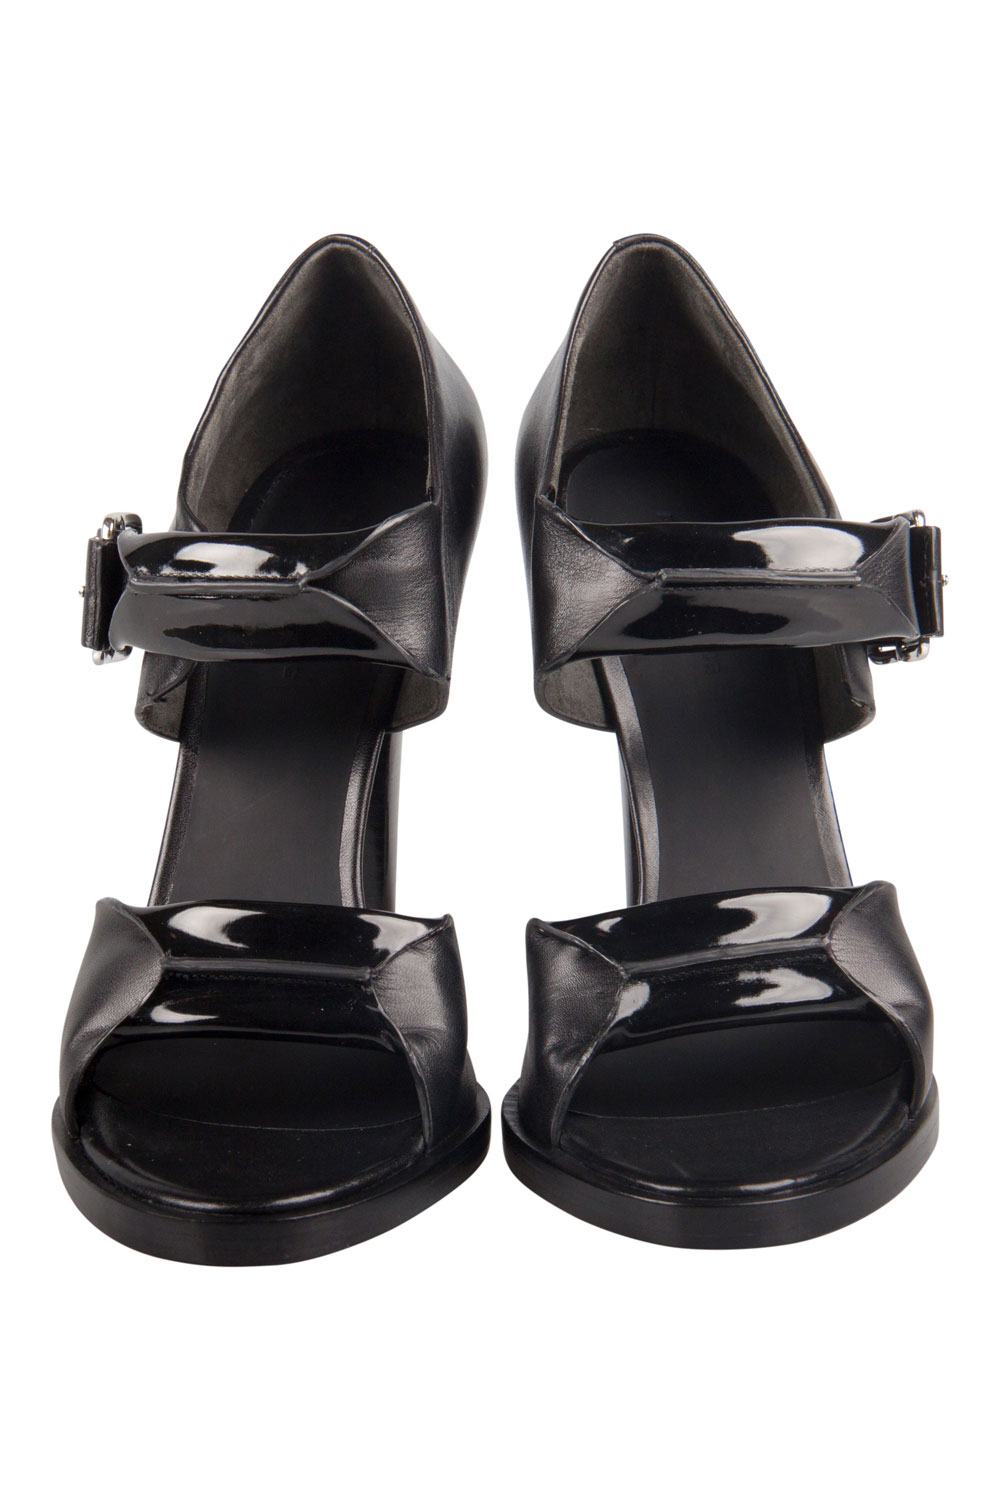 

Alexander Wang Black Patent Leather Kai Rubberized Open Toe Sandals Size